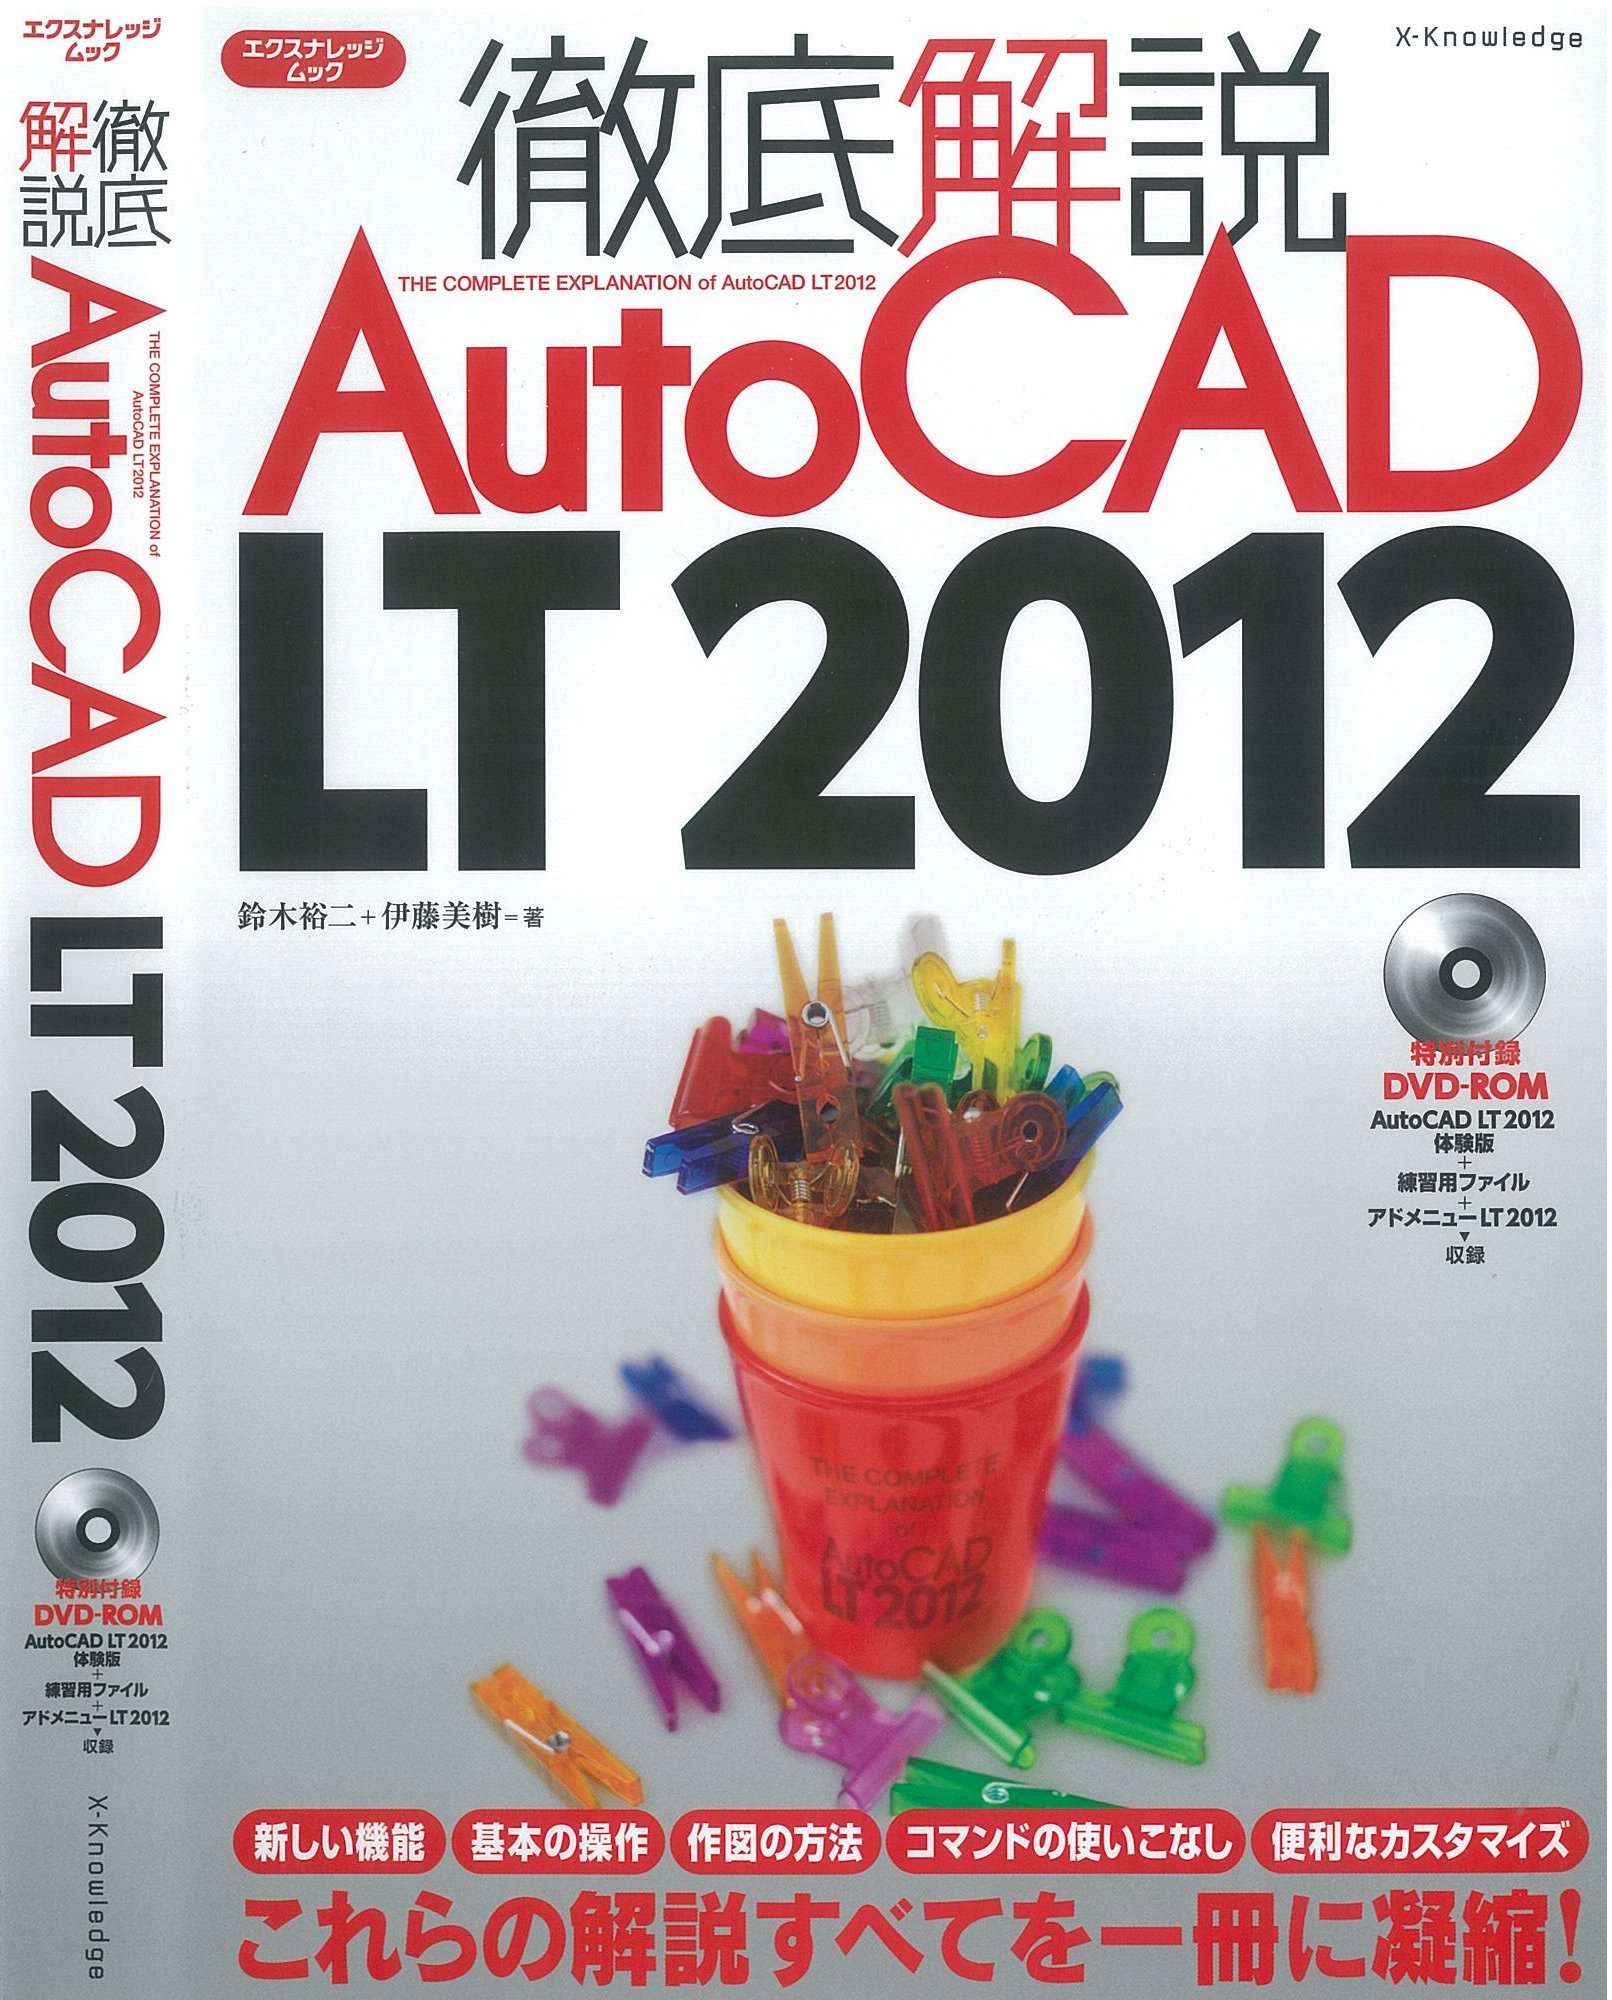 X-Knowledge | 徹底解説AutoCAD LT 2012